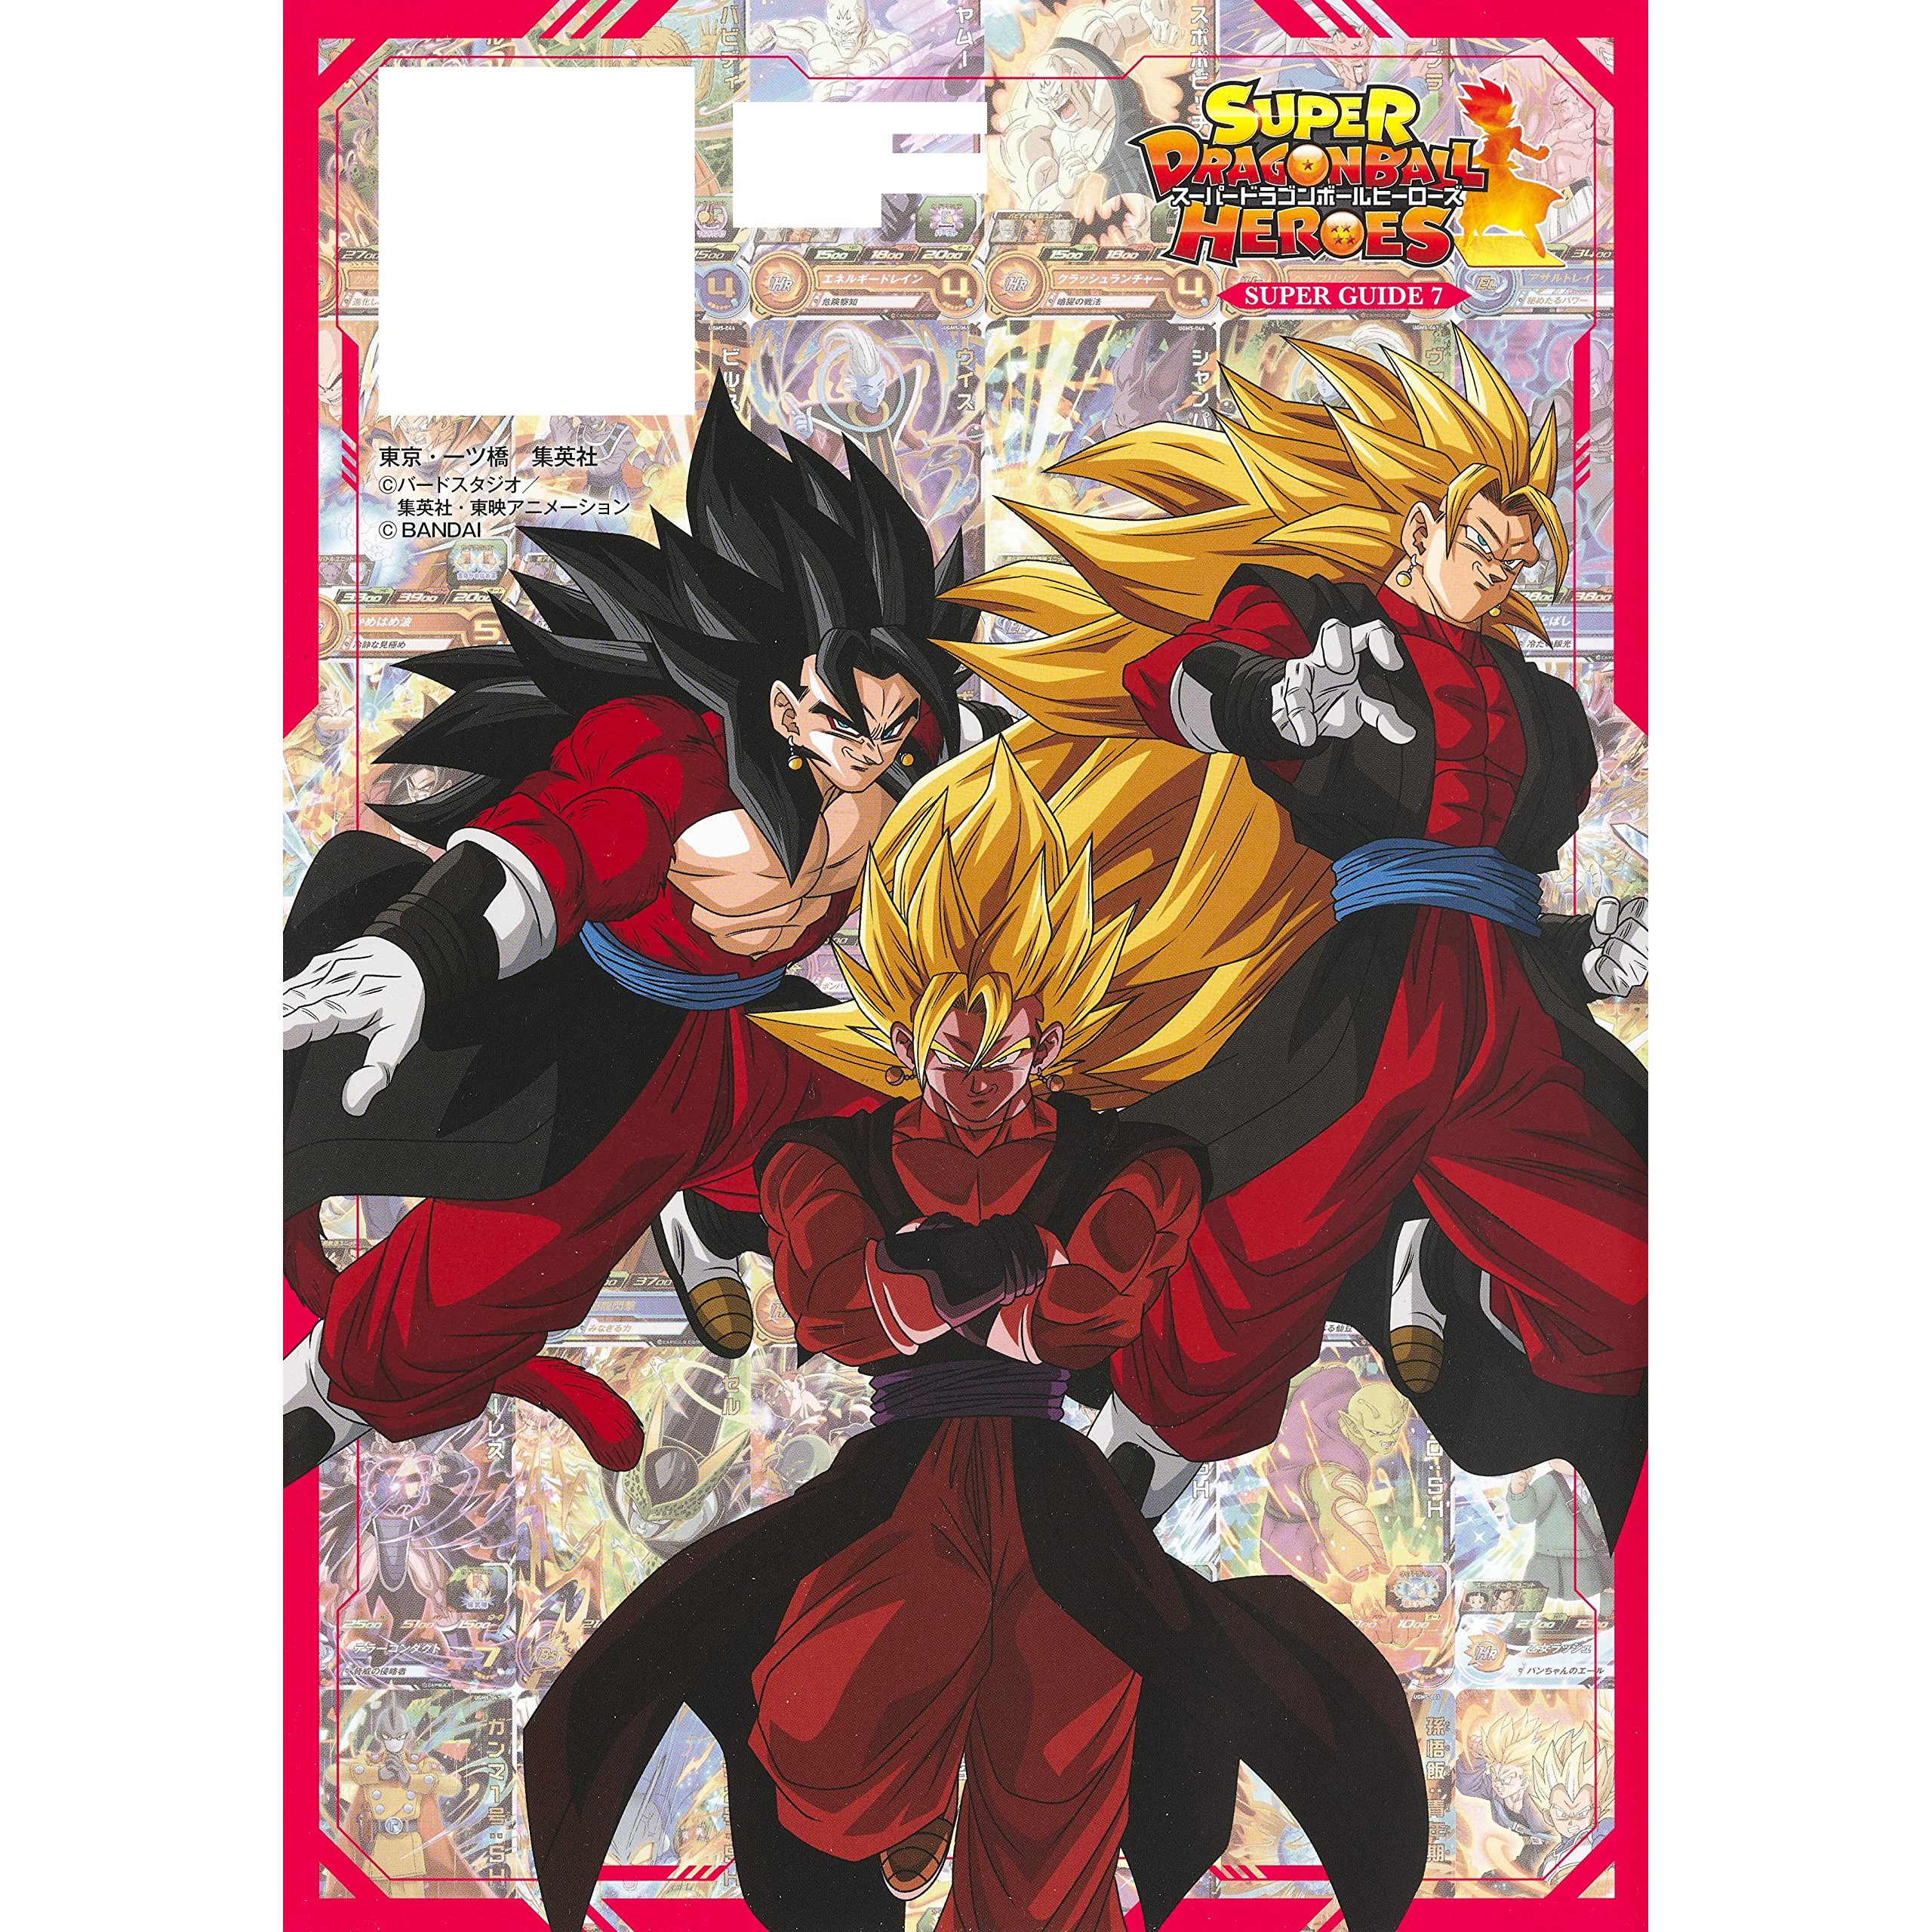 SUPER DRAGON BALL HEROES 12th ANNIVERSARY SUPER GUIDE  Release date: November 10 2022  Included promotional cards:      UGM5-002 DA Son Gohan : Shouenki     UGPJ-16 Son Goku     UGPJ-17 Cell